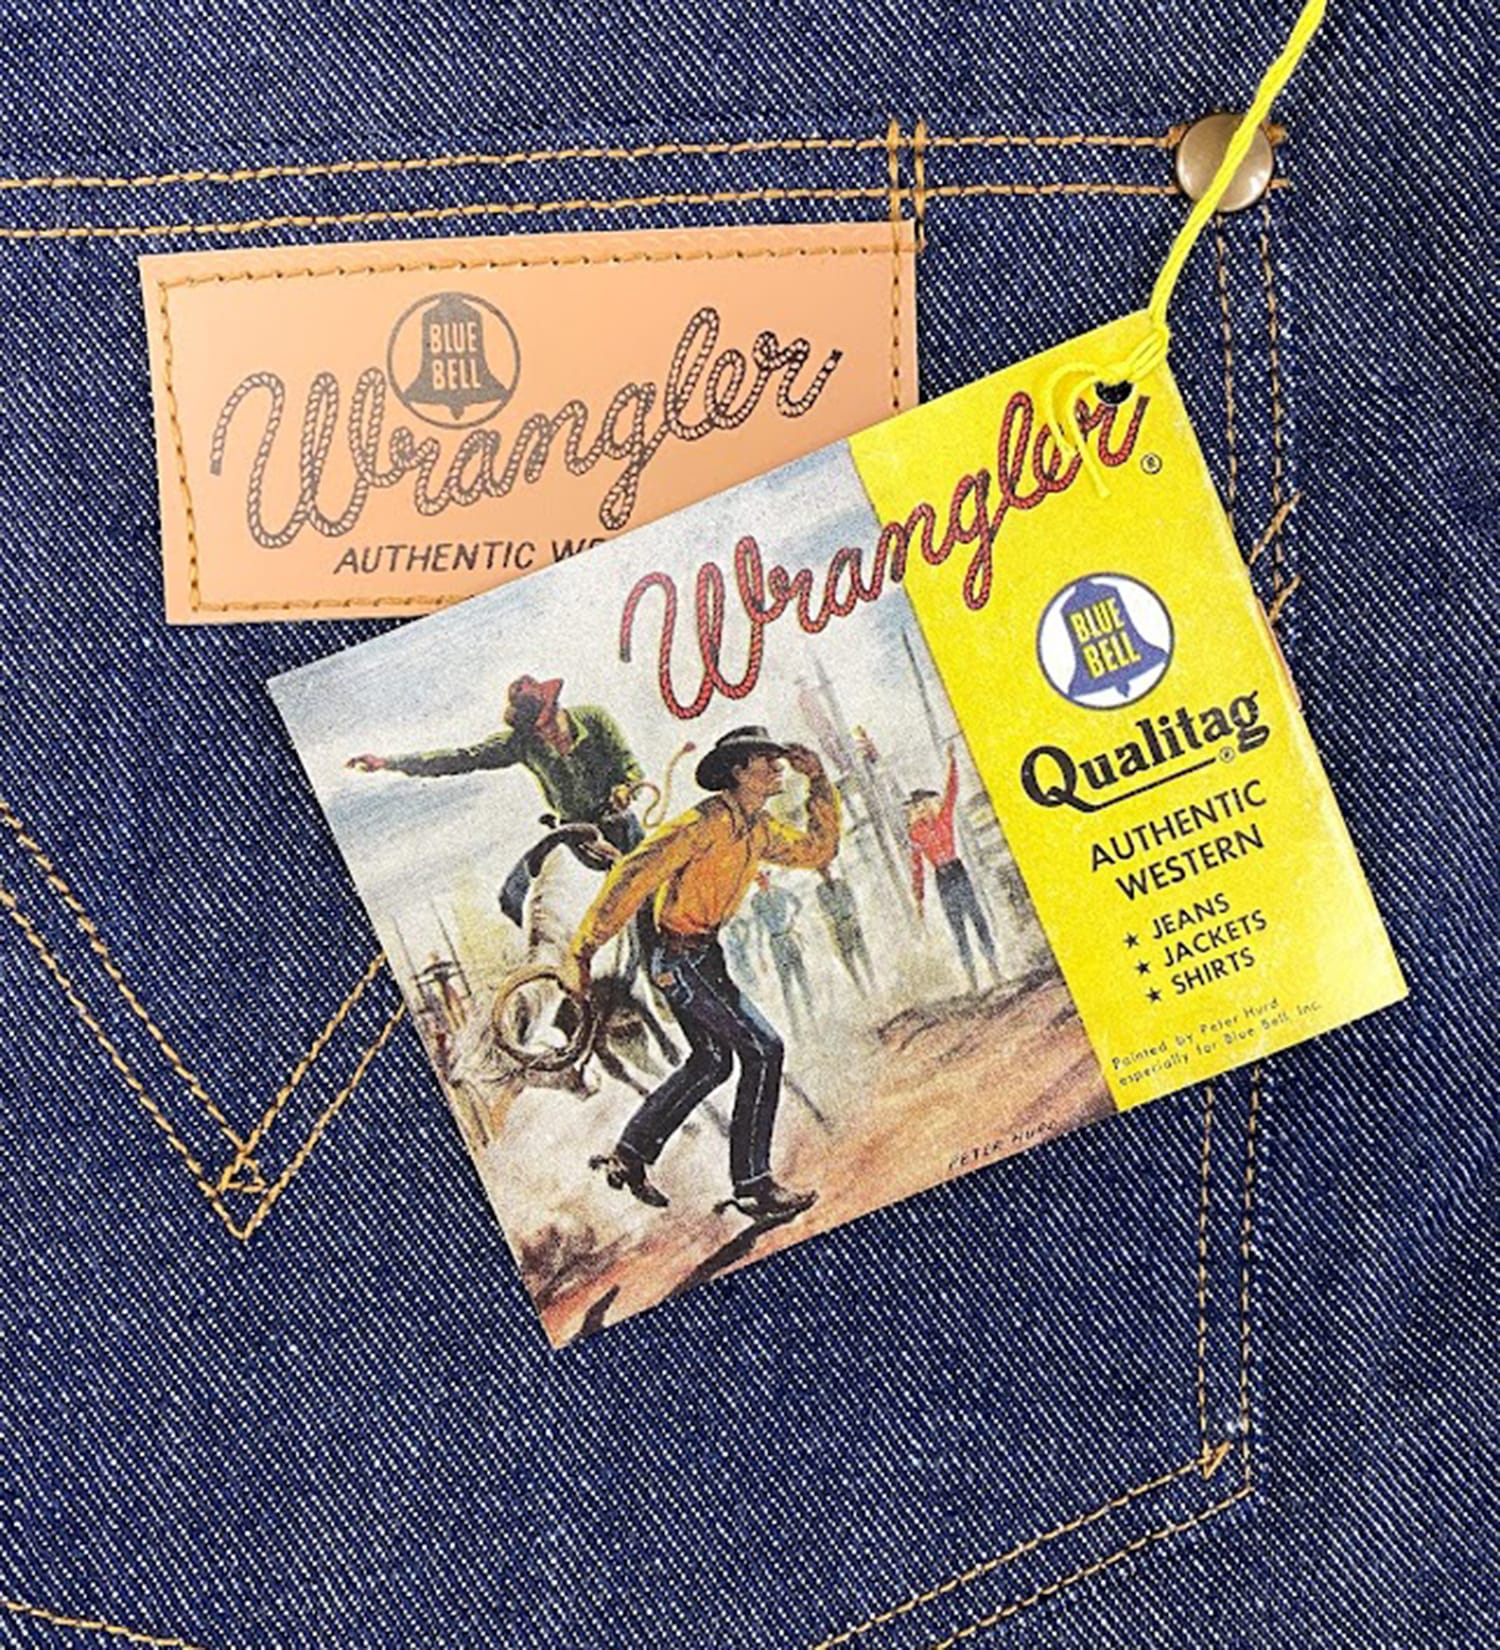 Wrangler(ラングラー)のARCHIVE 11MW 1951MODEL デニムパンツ|パンツ/デニムパンツ/メンズ|インディゴ未洗い